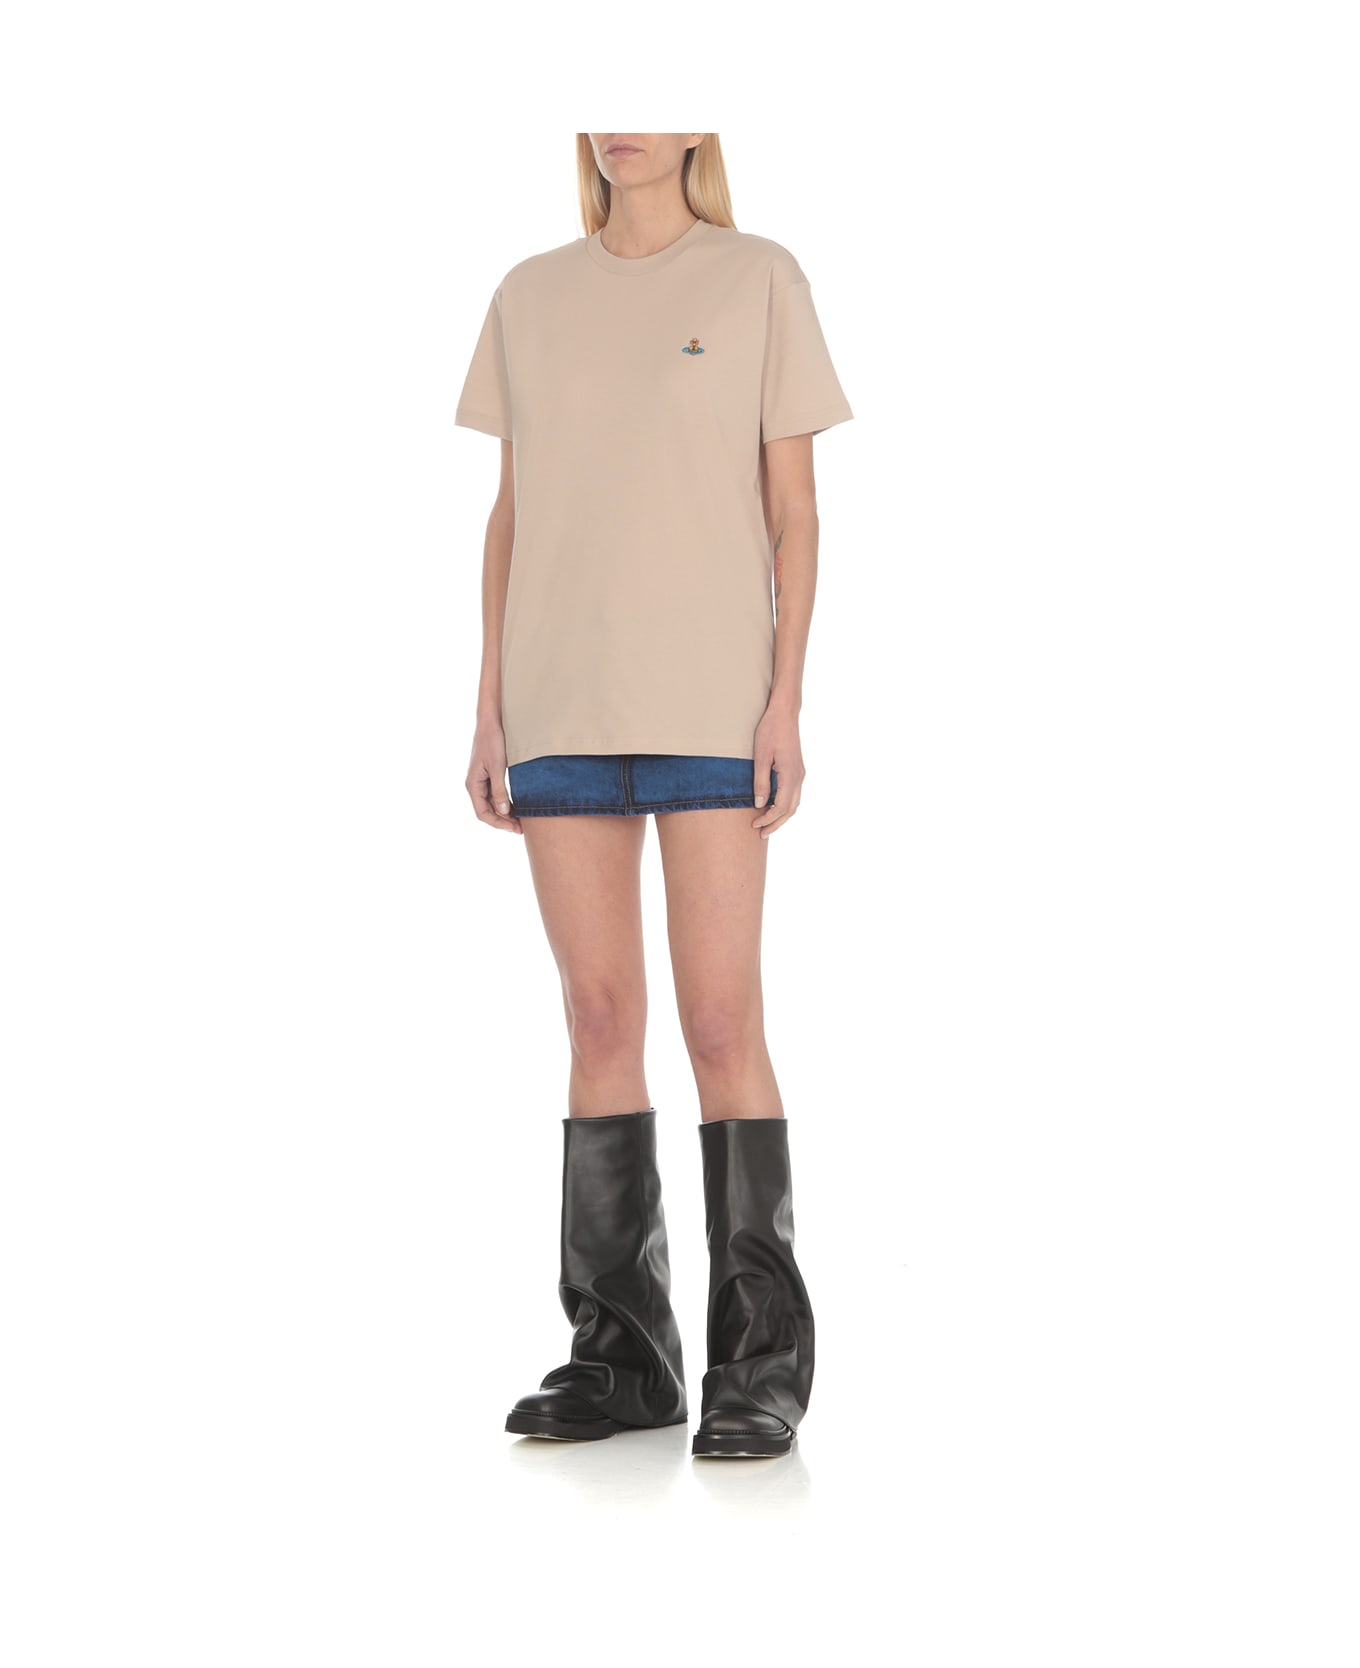 Vivienne Westwood Classic Orb T-shirt - Beige